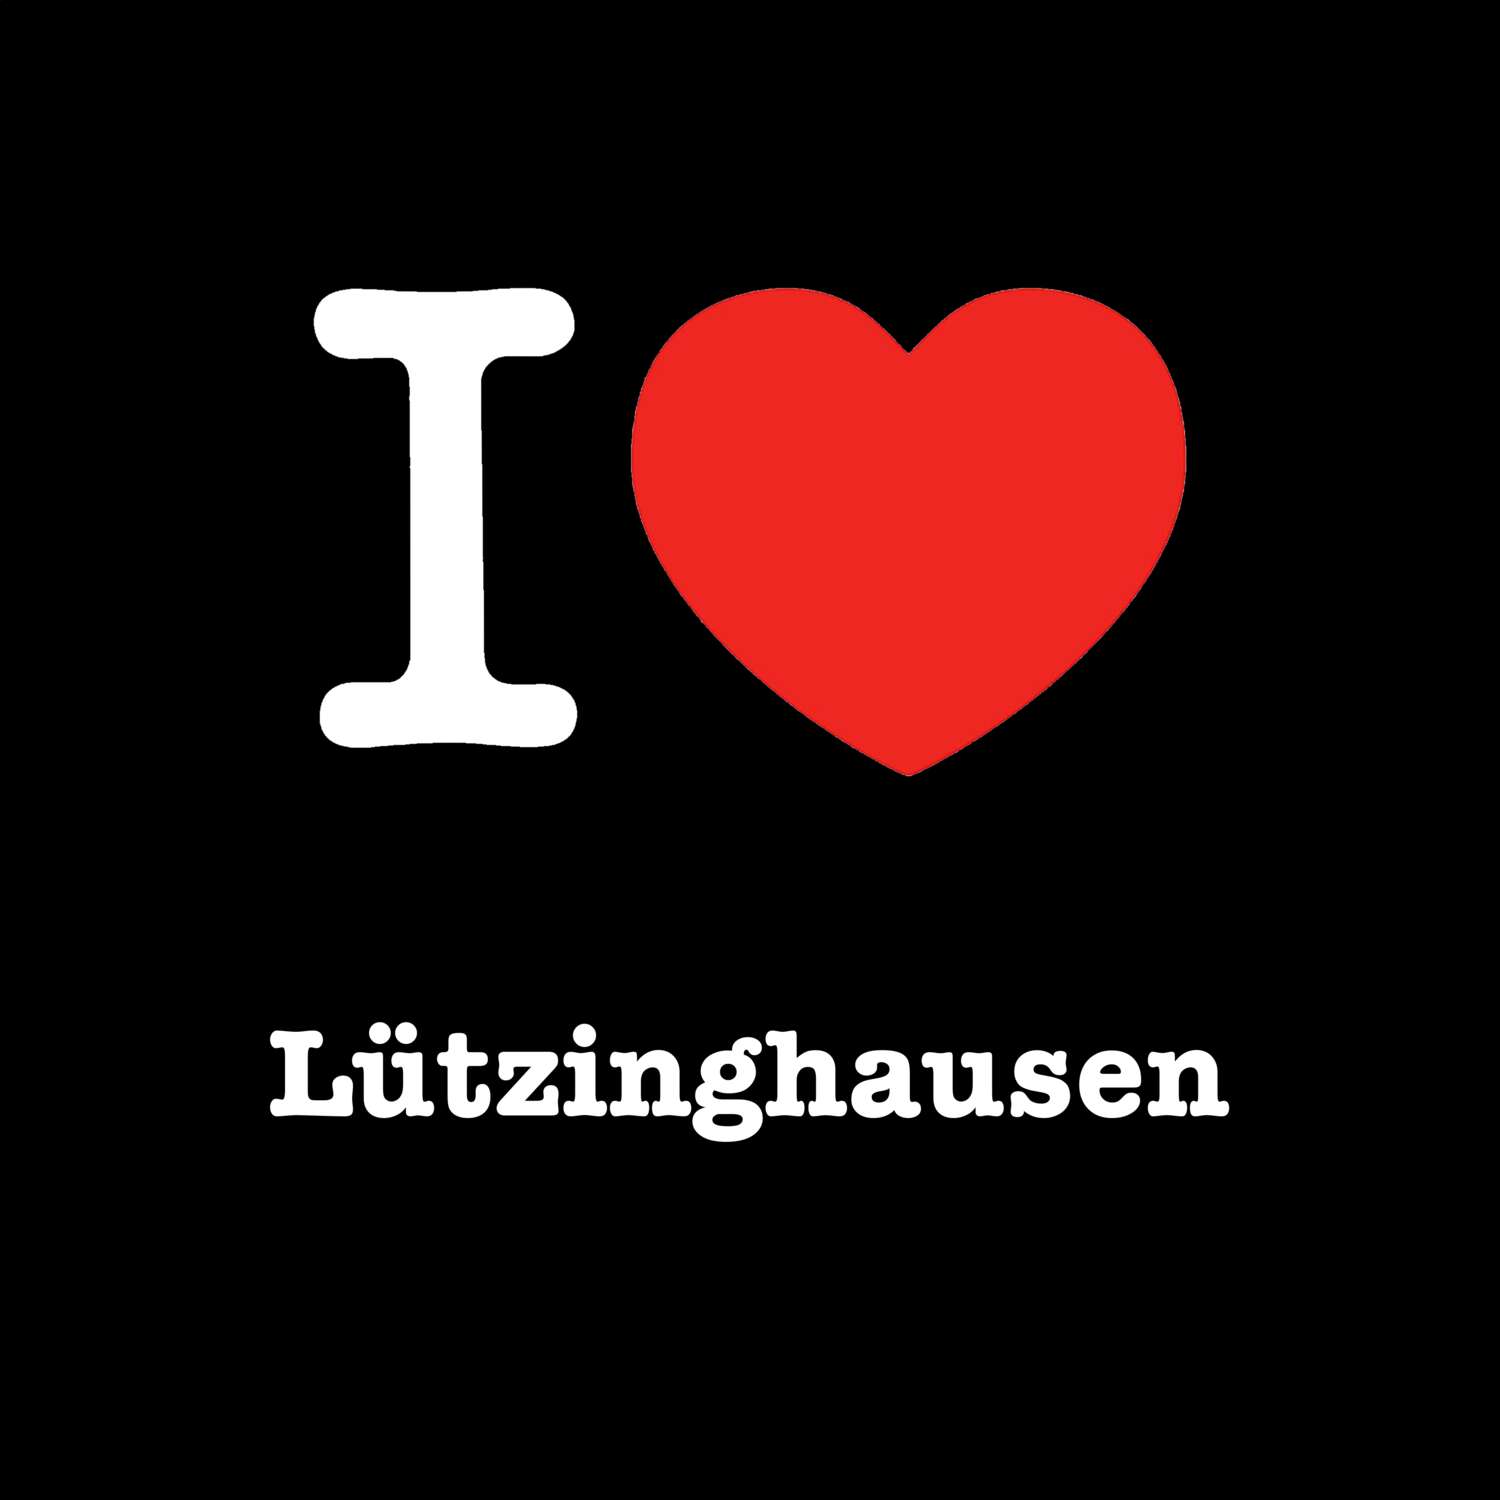 Lützinghausen T-Shirt »I love«